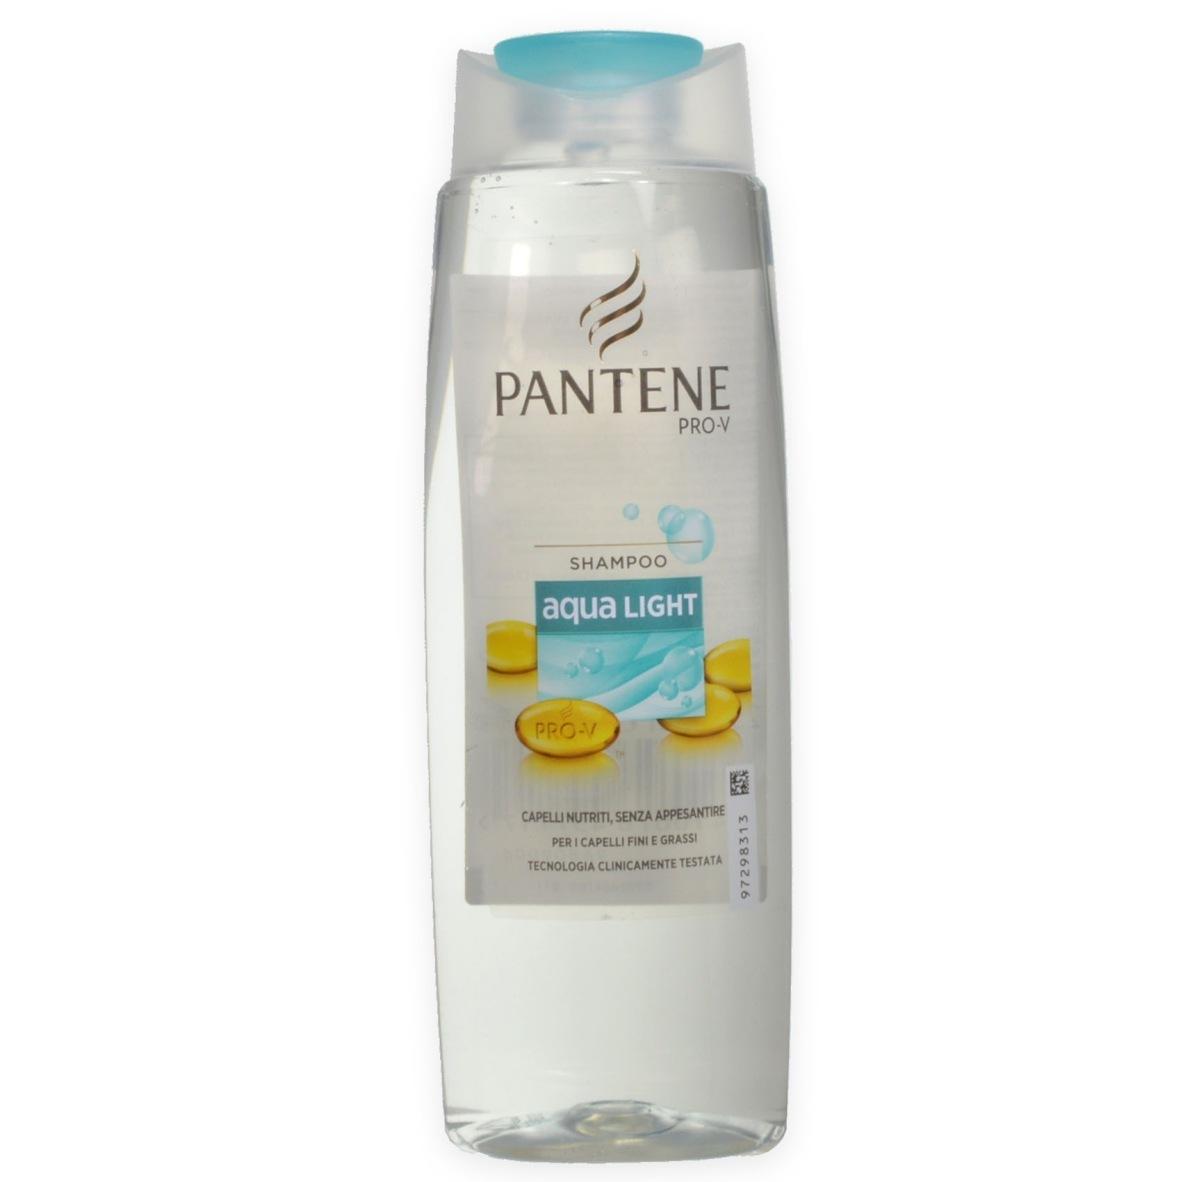 Pantene shampoo 250 ml aqualight